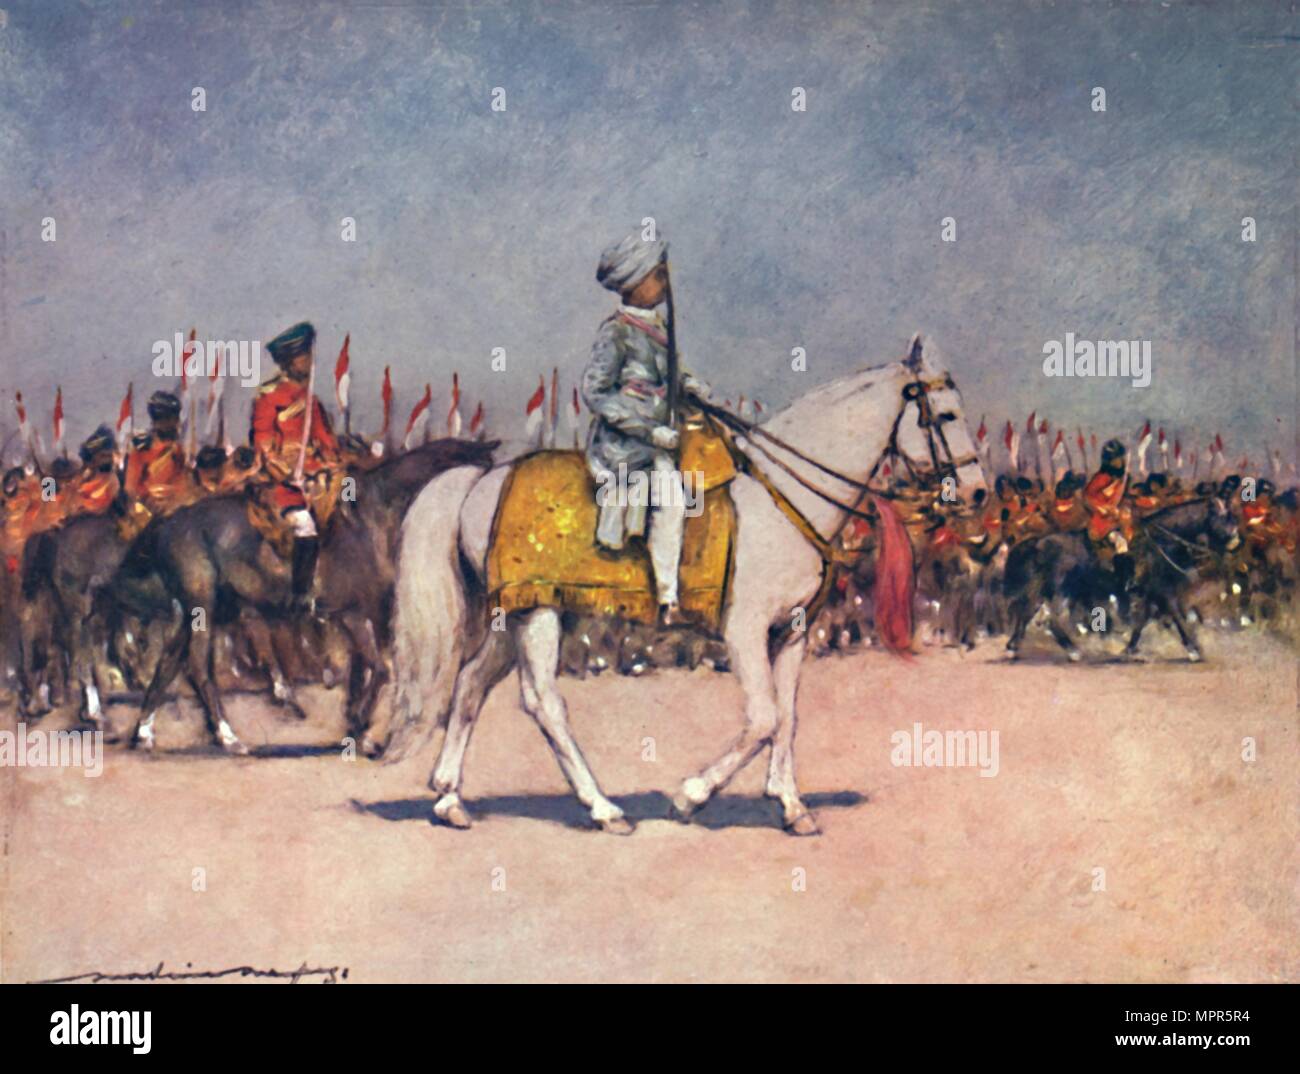 'His Highness the Maharaja of Patiala', 1903. Artist: Mortimer L Menpes. Stock Photo